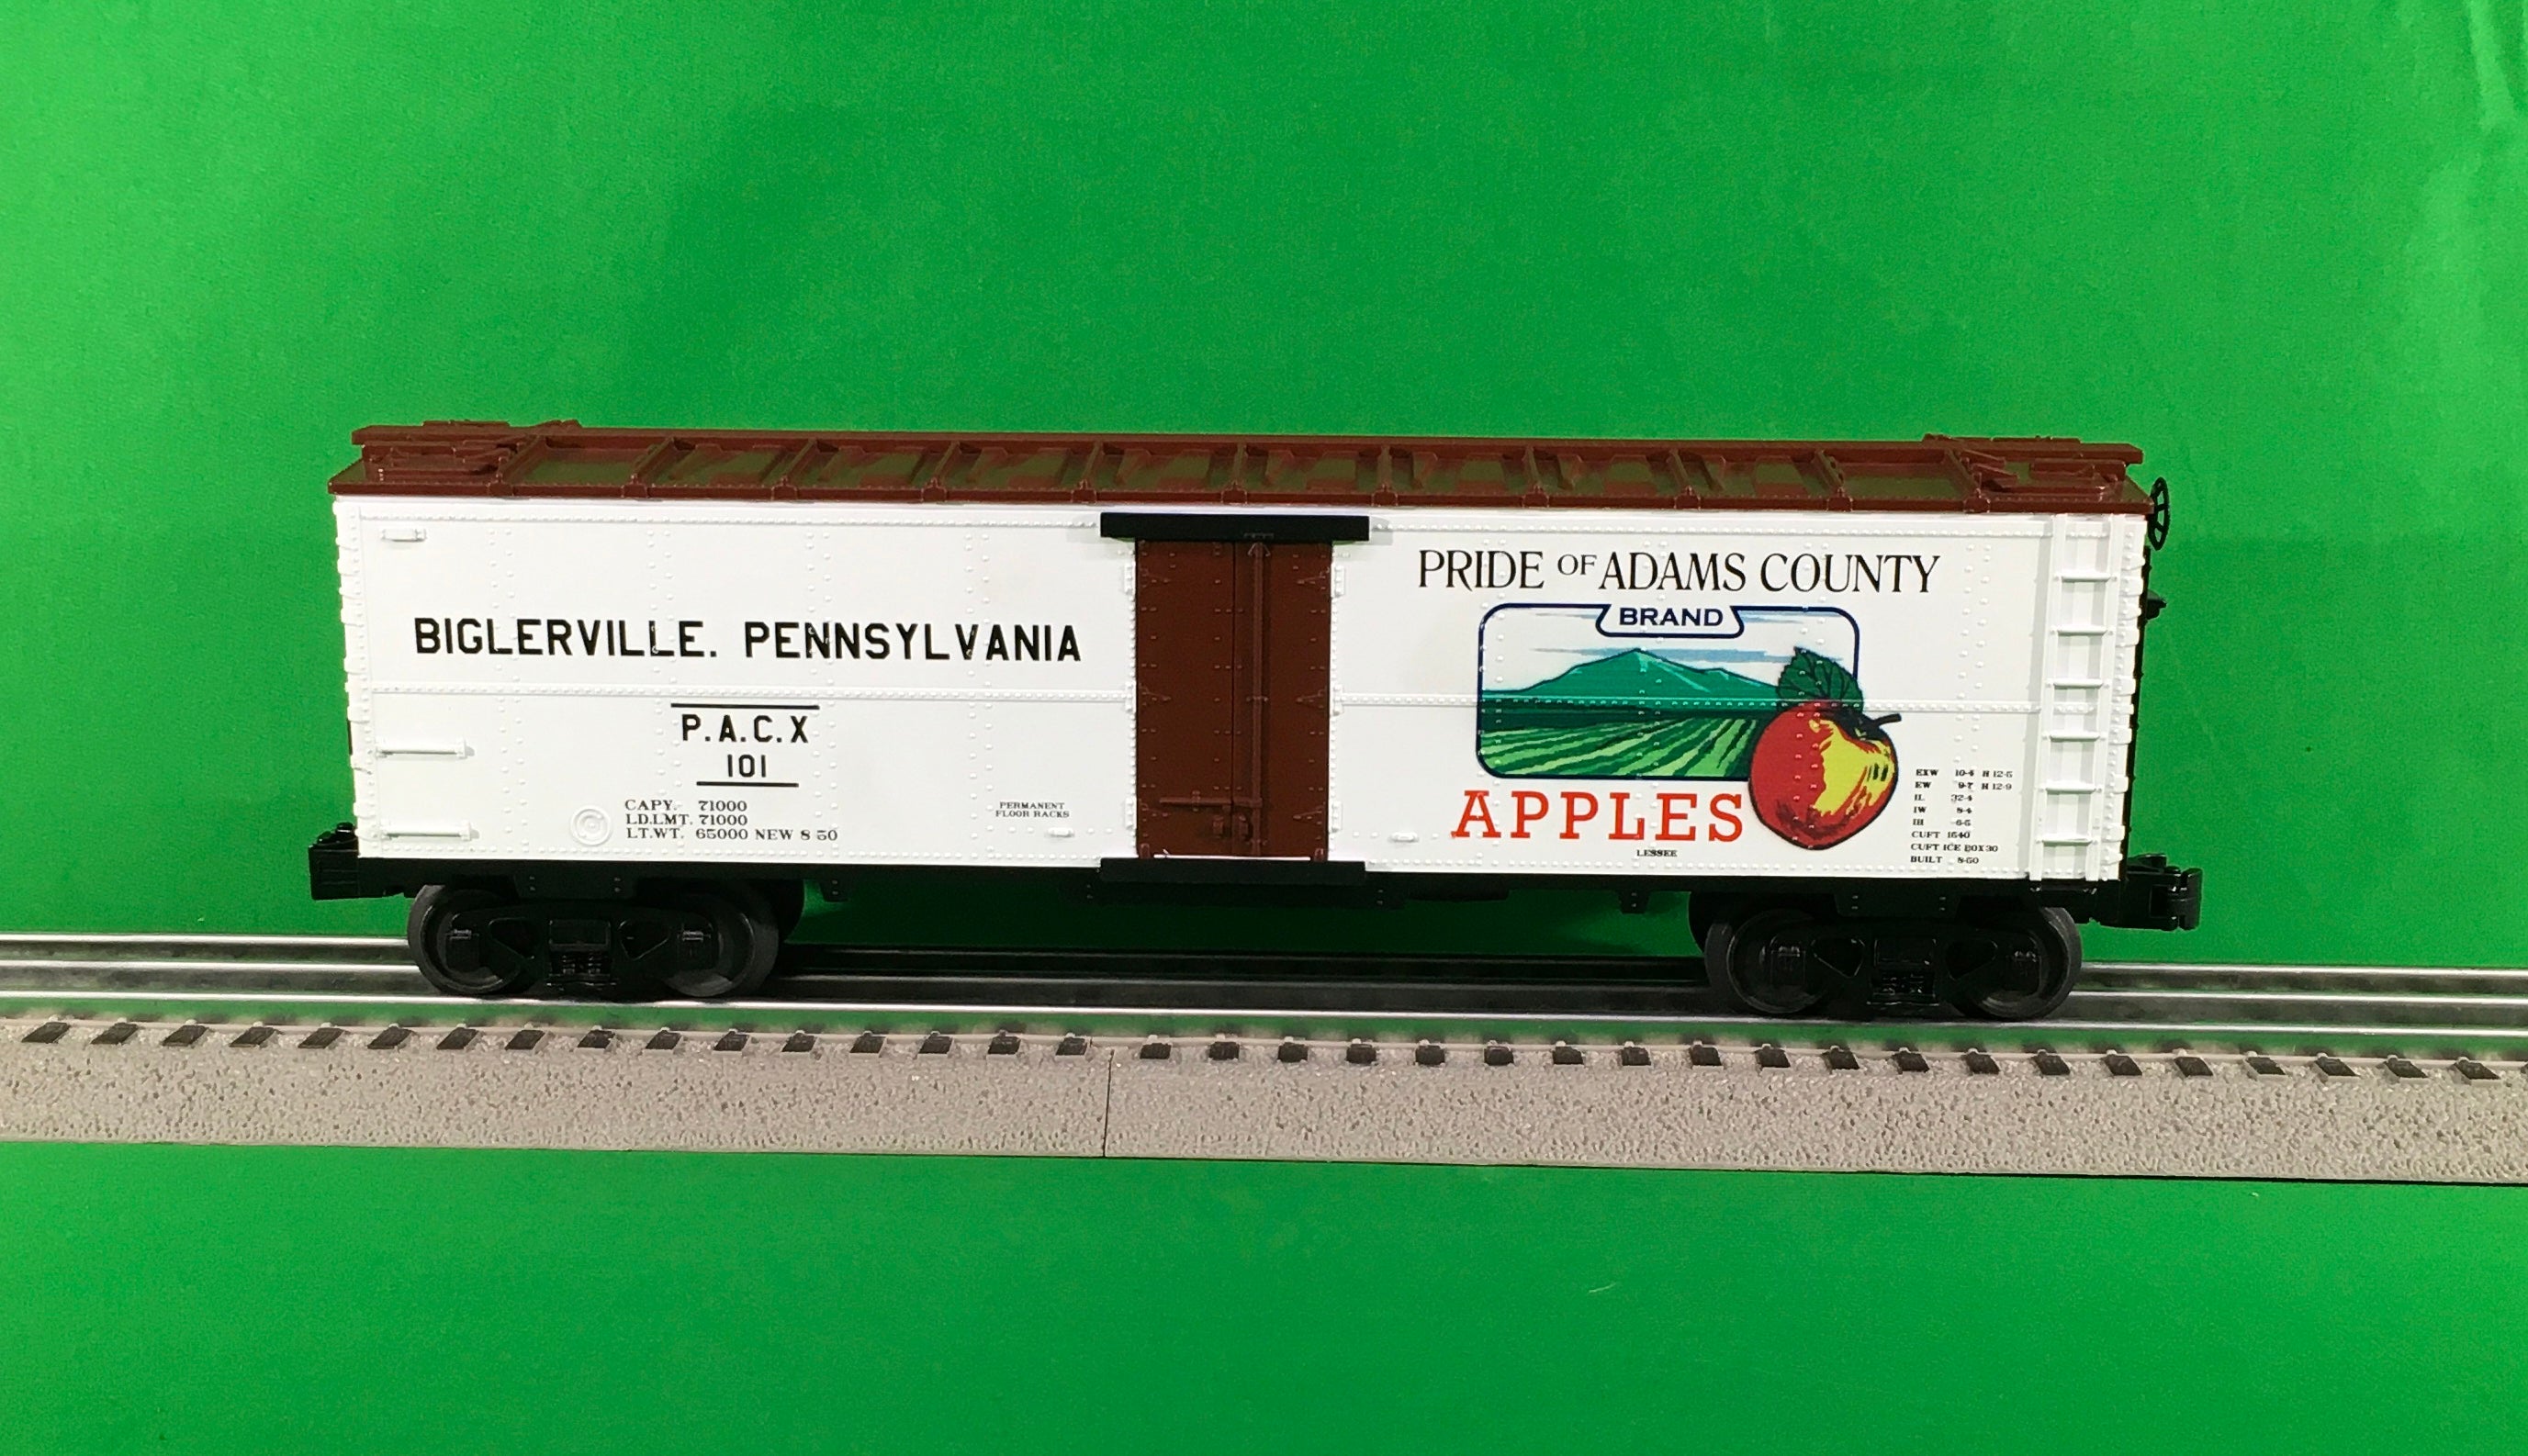 MTH 30-78228 - Modern Reefer Car "Biglerville. Pennsylvania" #101 (Adams County Apples)